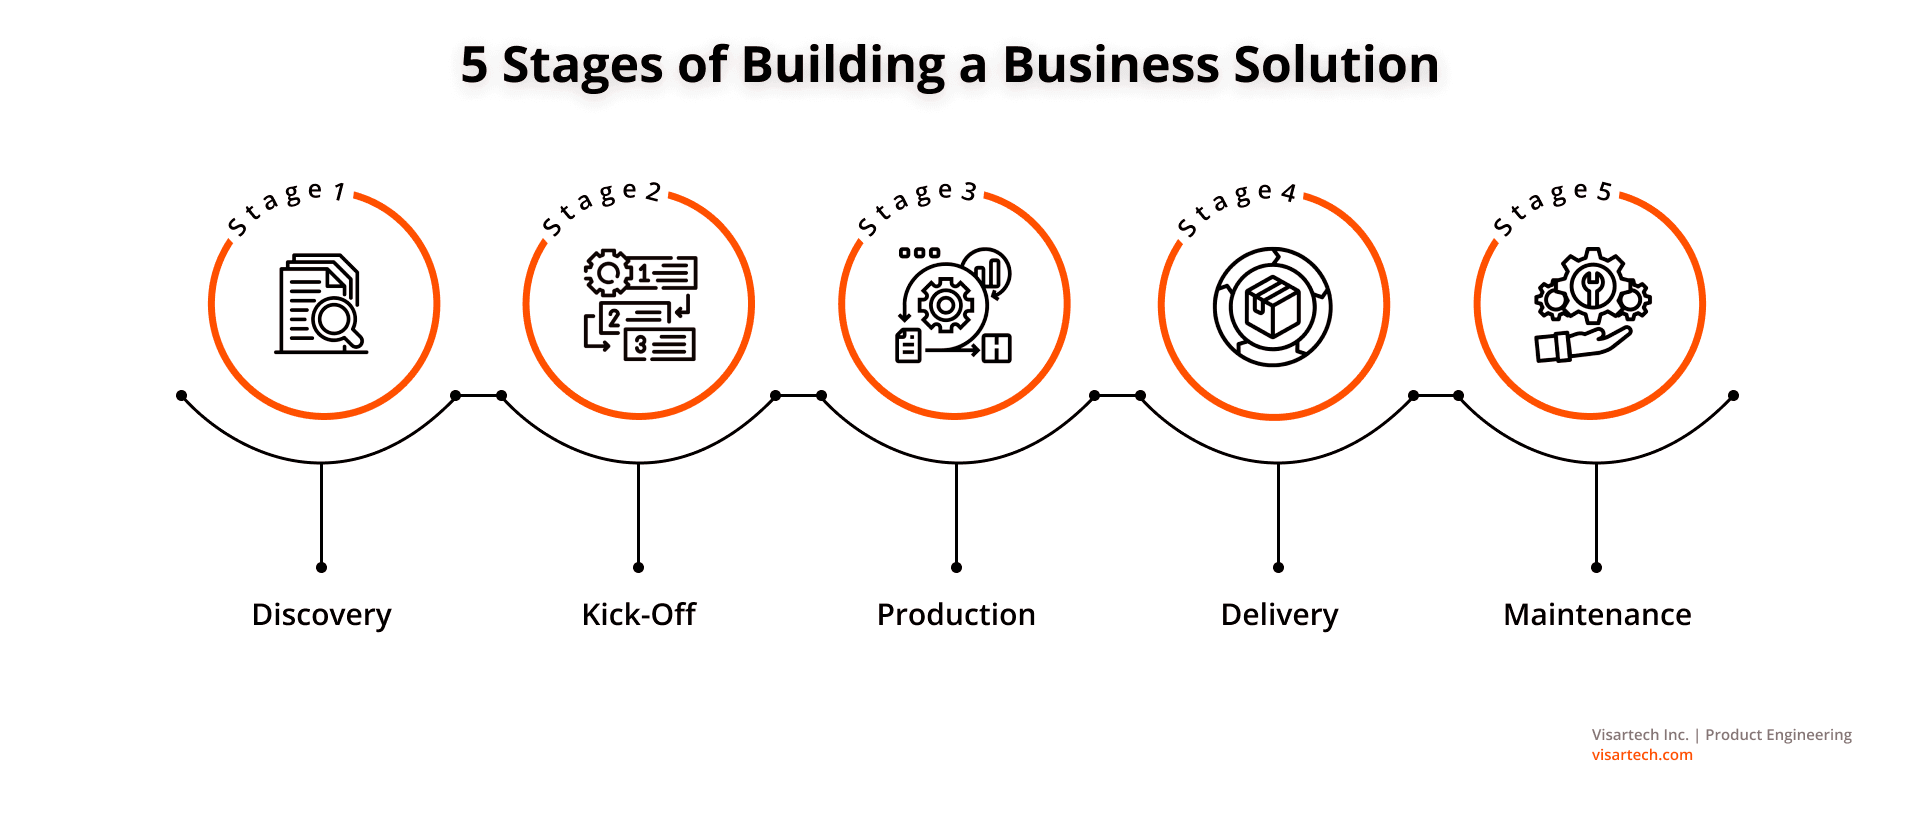 5 Stages of Building a Business Solution - Visartech Blog